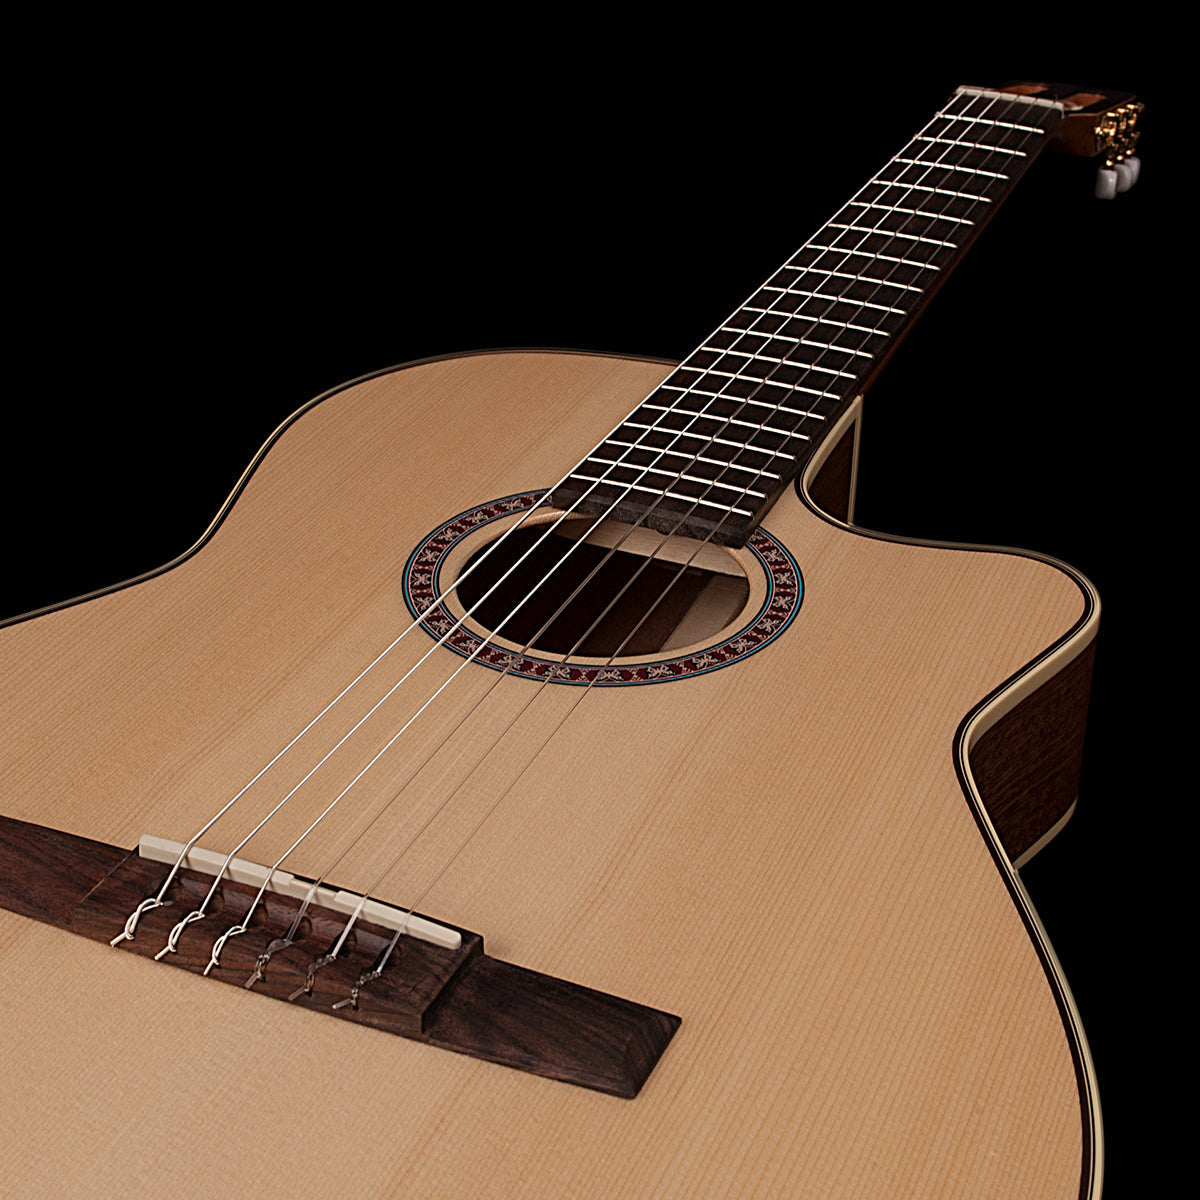 Godin Arena Mahogany Cutaway Clasica II Nylon String Electro Guitar,  for sale at Richards Guitars.